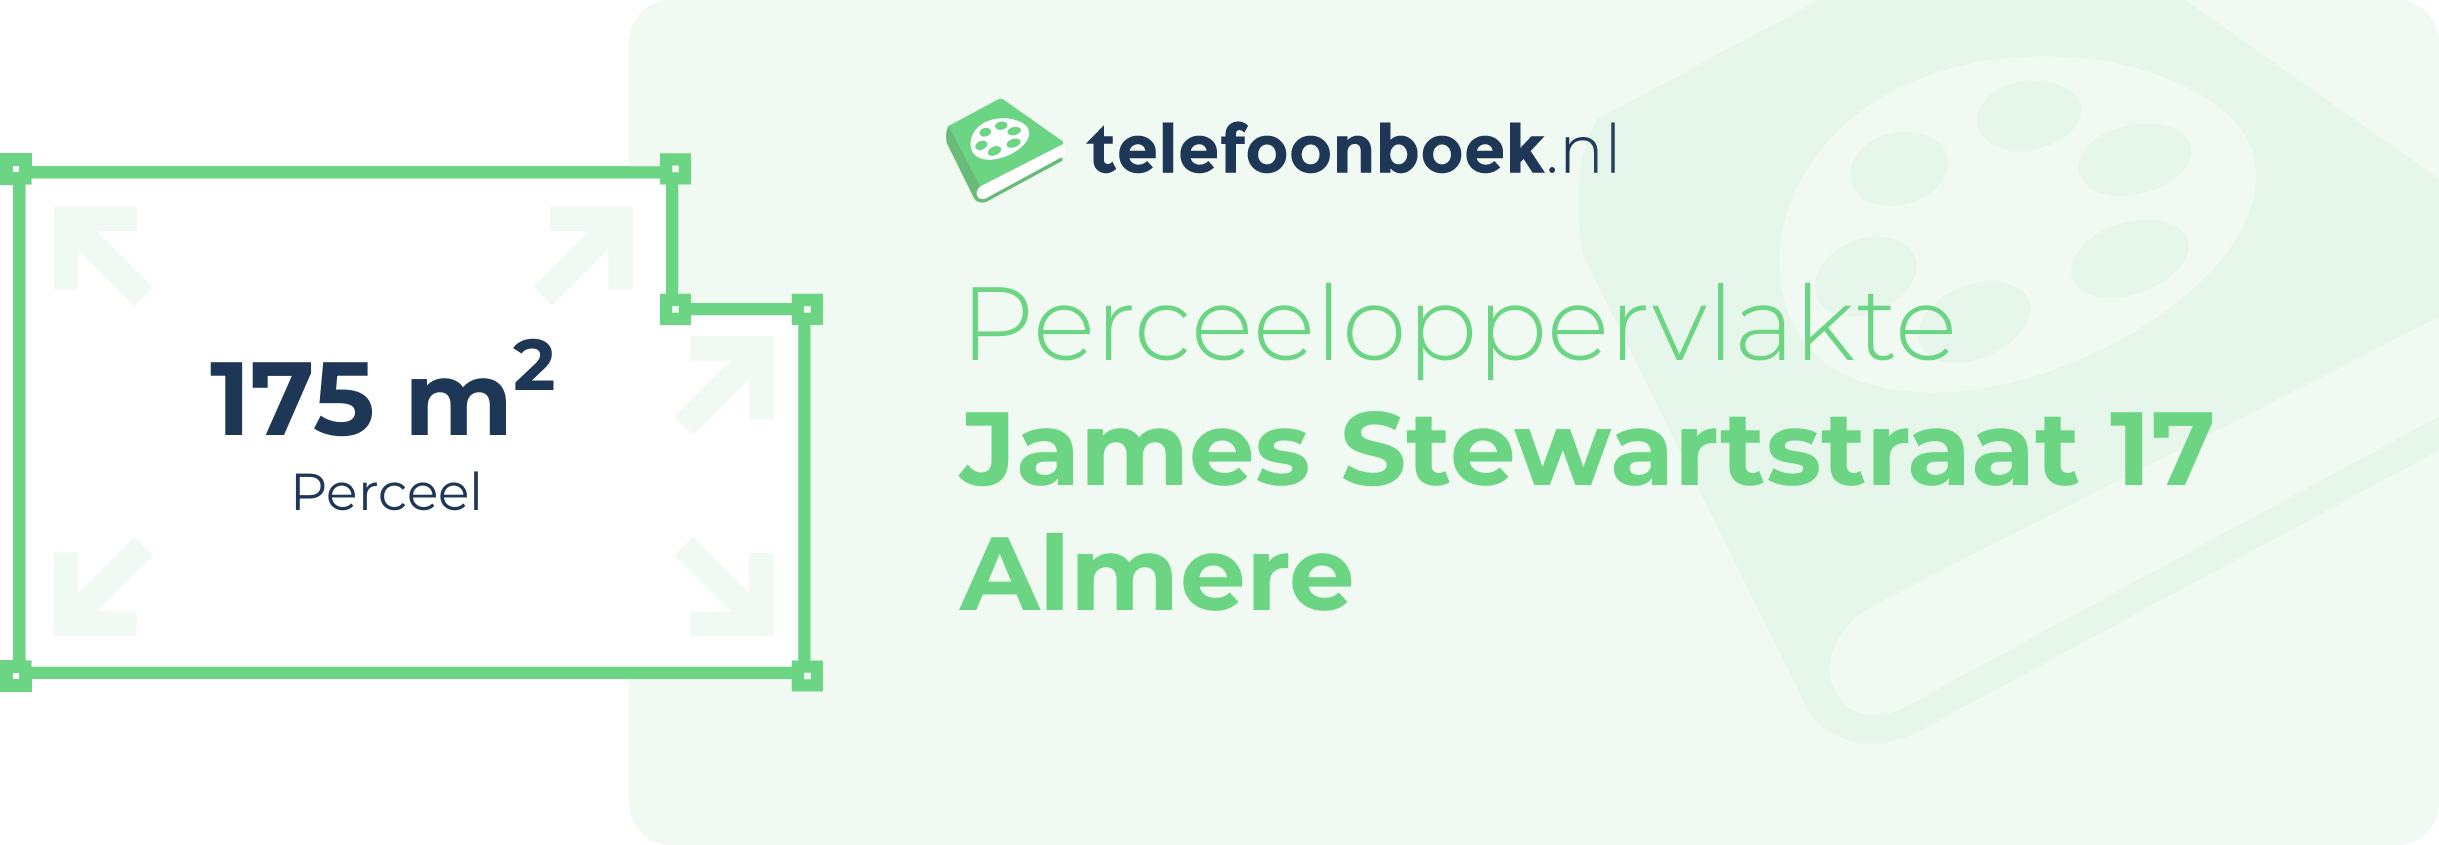 Perceeloppervlakte James Stewartstraat 17 Almere